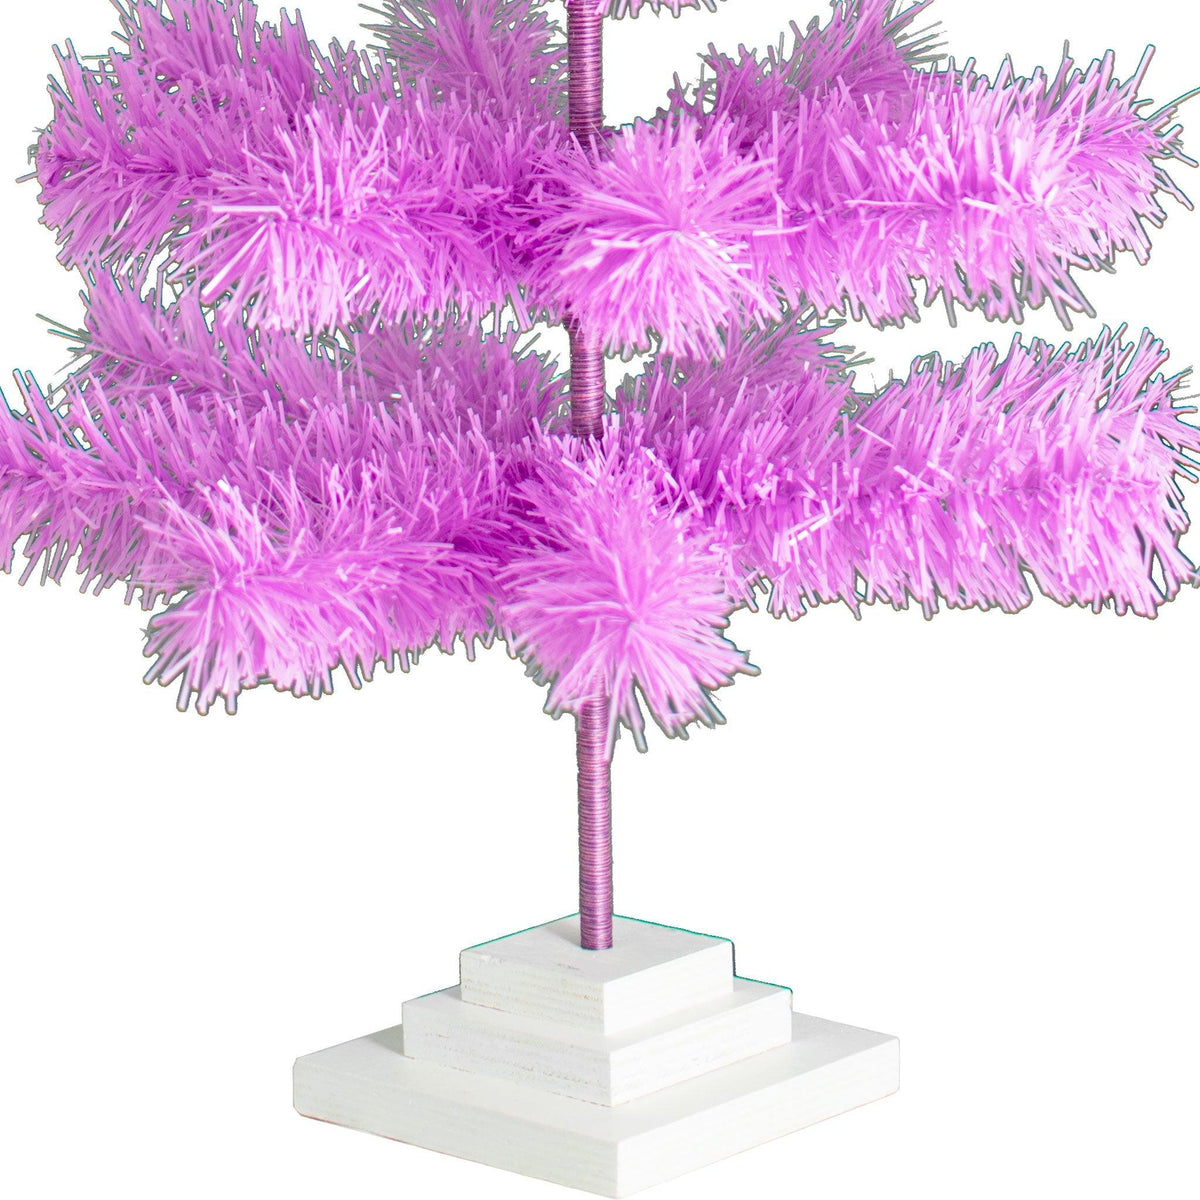 Lee Display's brand new Lavender colored Tinsel Christmas Trees on sale now at leedisplay.com